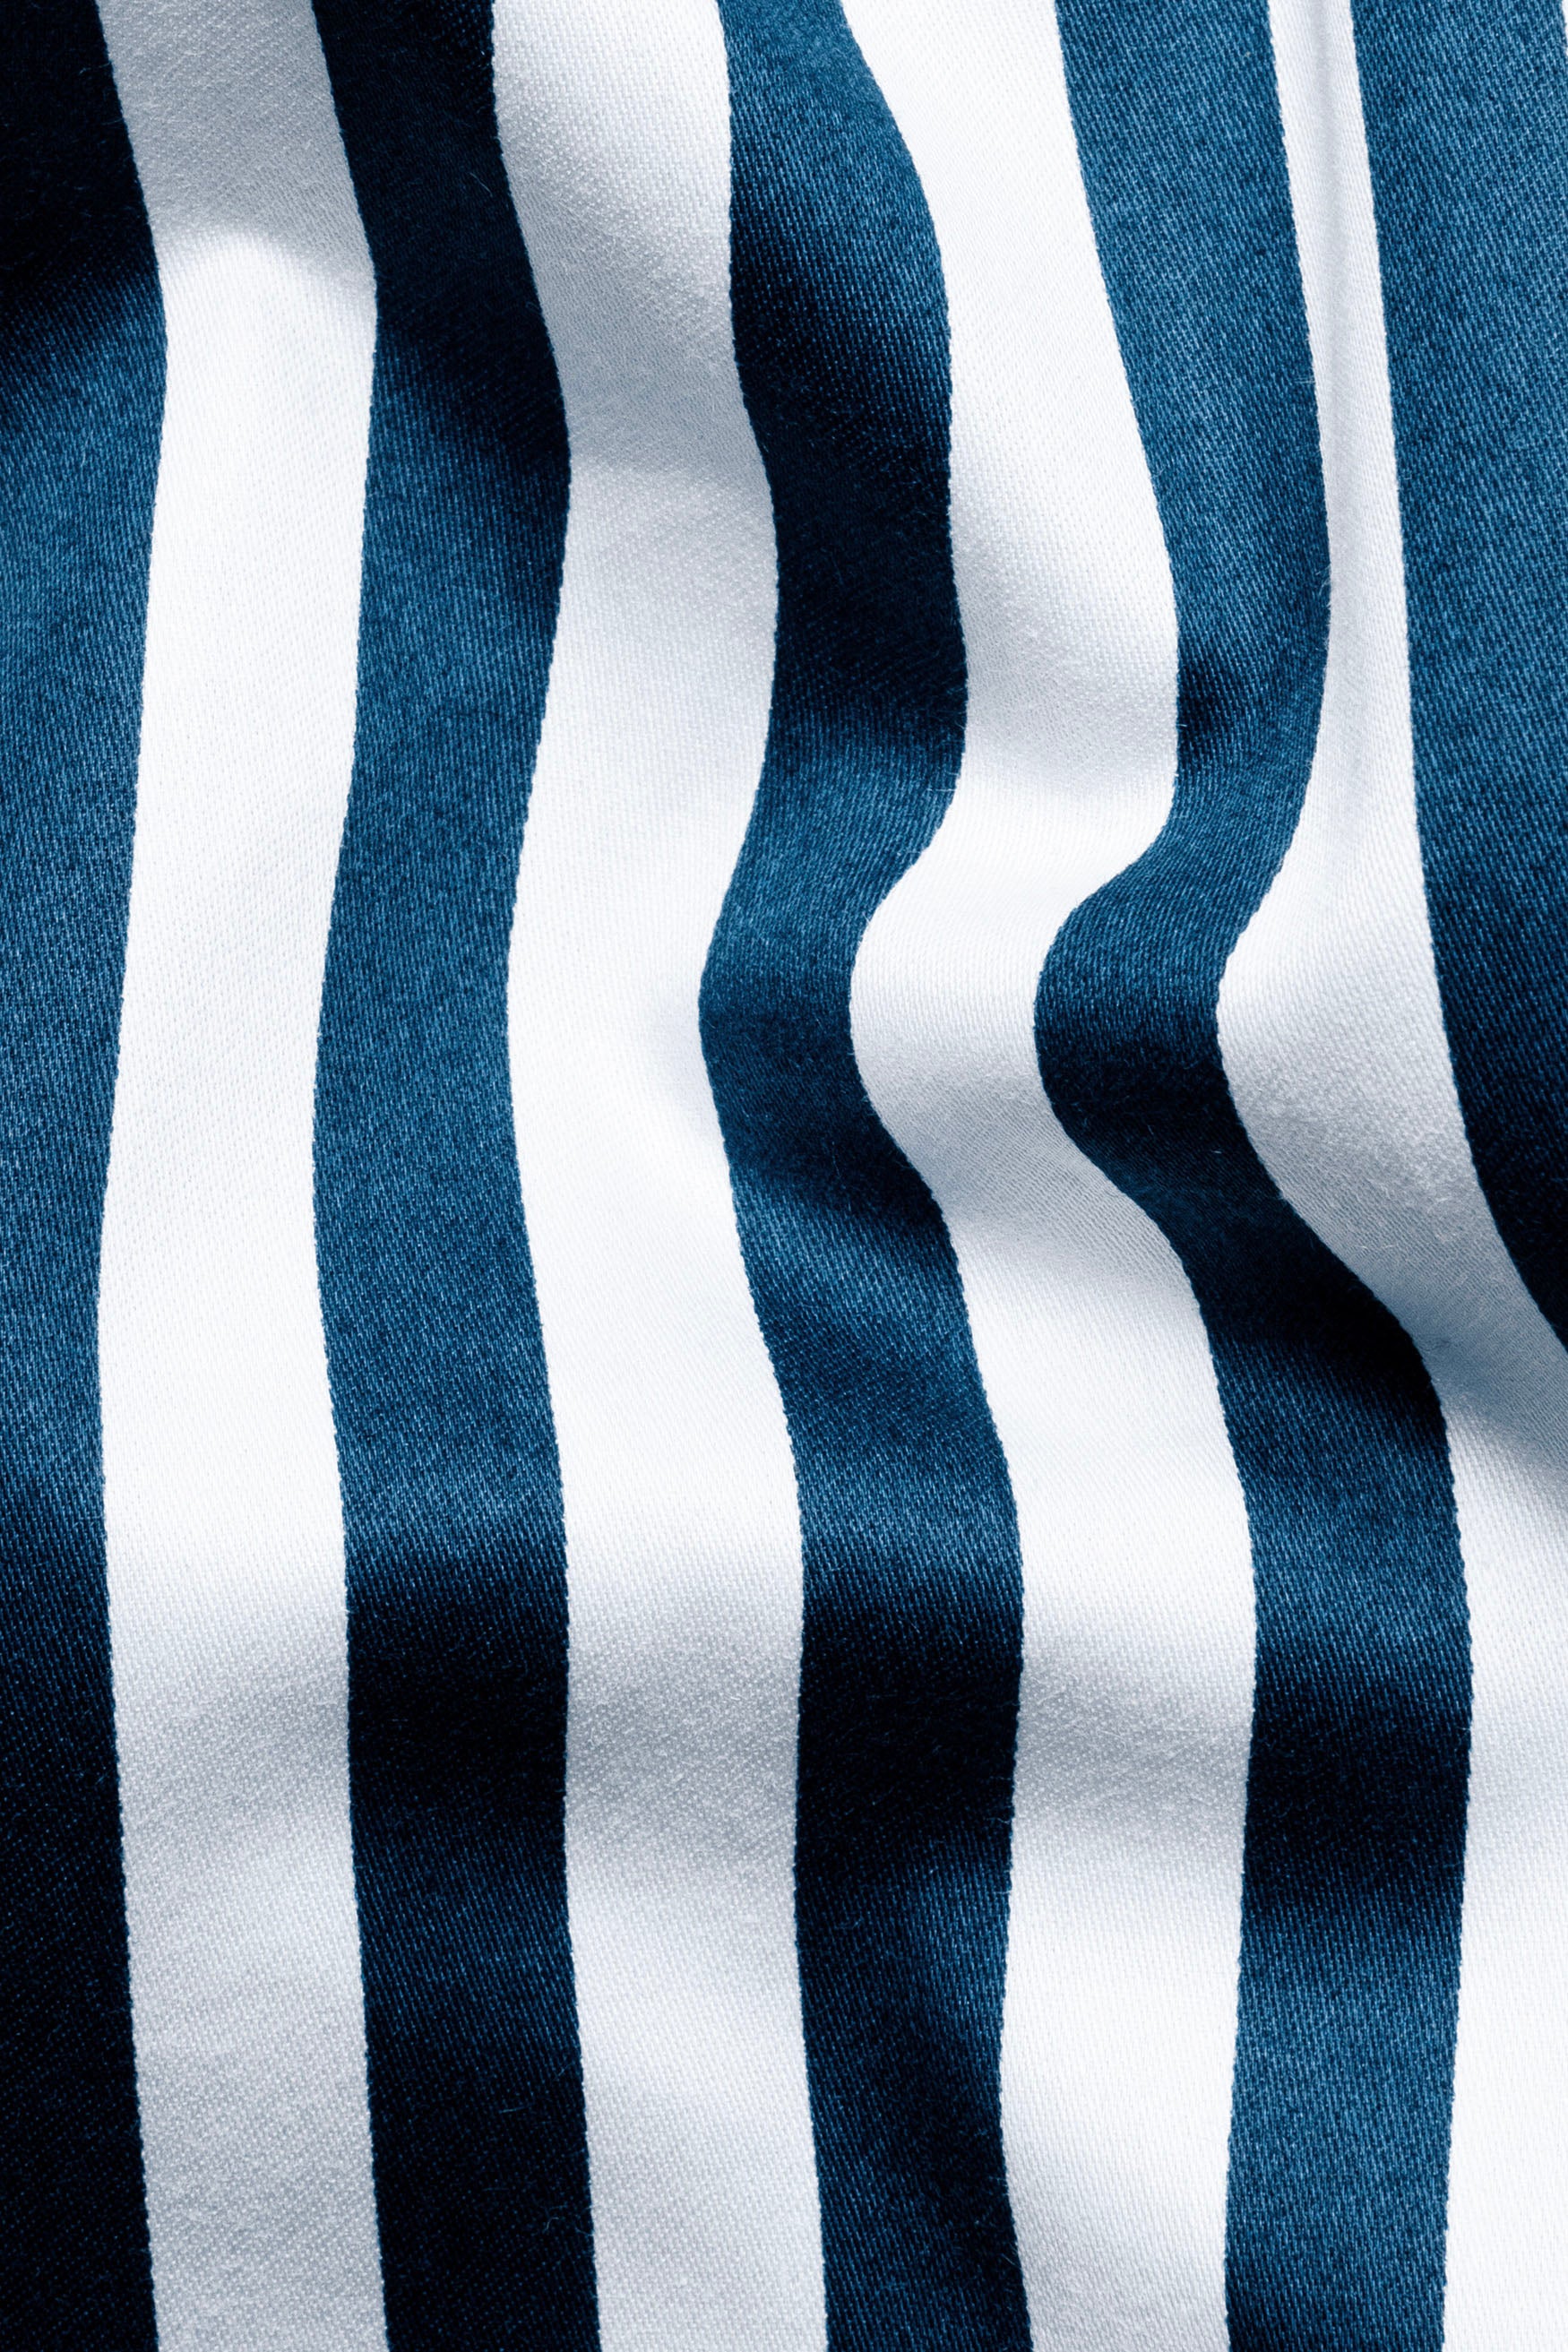 Regal Blue and Bright White Striped Subtle Sheen Super Soft Premium Cotton Designer Shirt